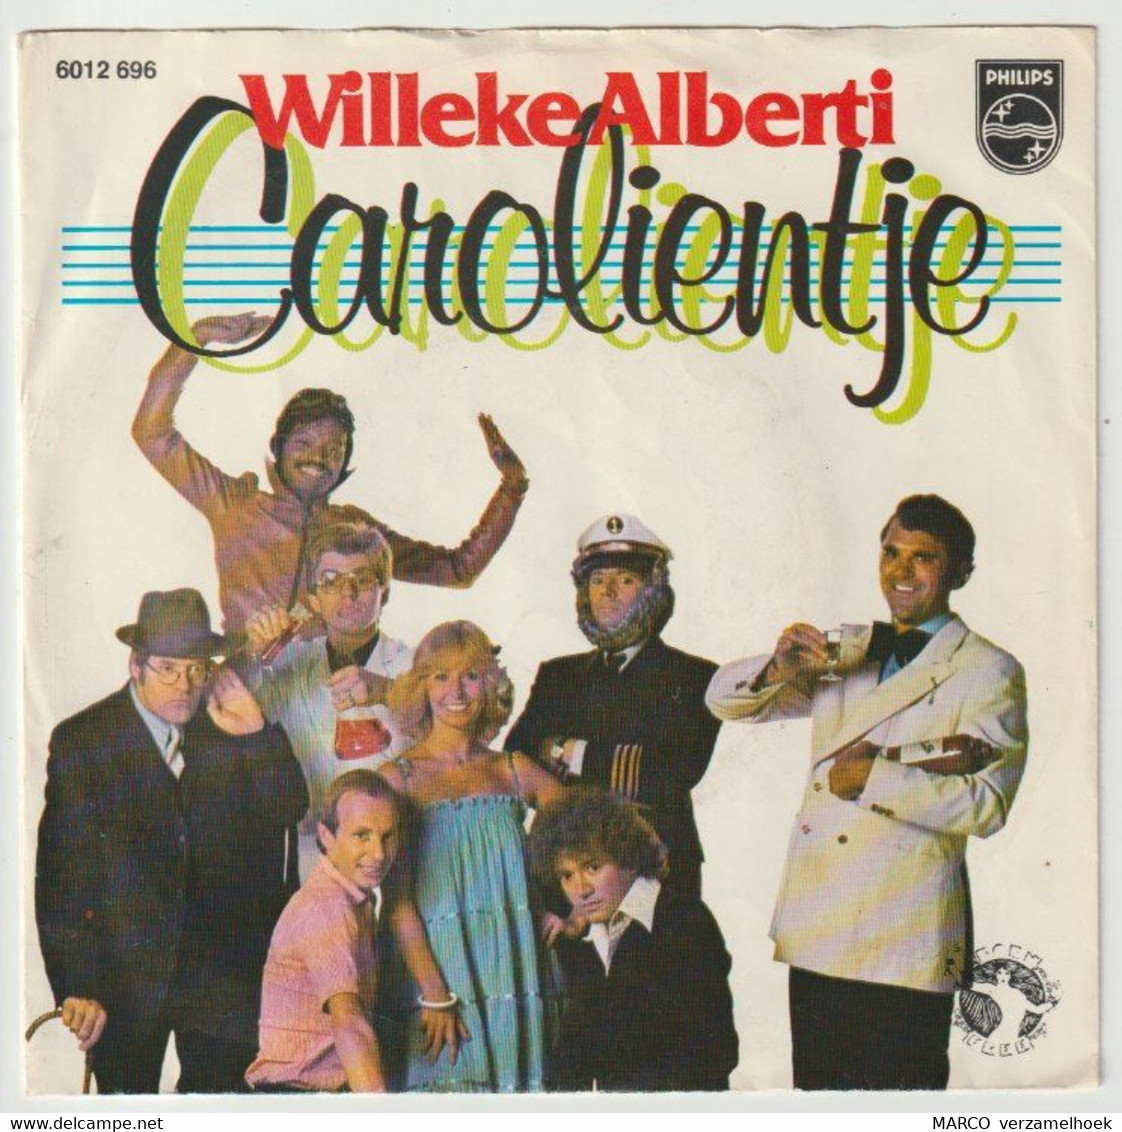 45T Single Willeke Alberti - Carolientje PHILIPS 6012 696 - Other - Dutch Music